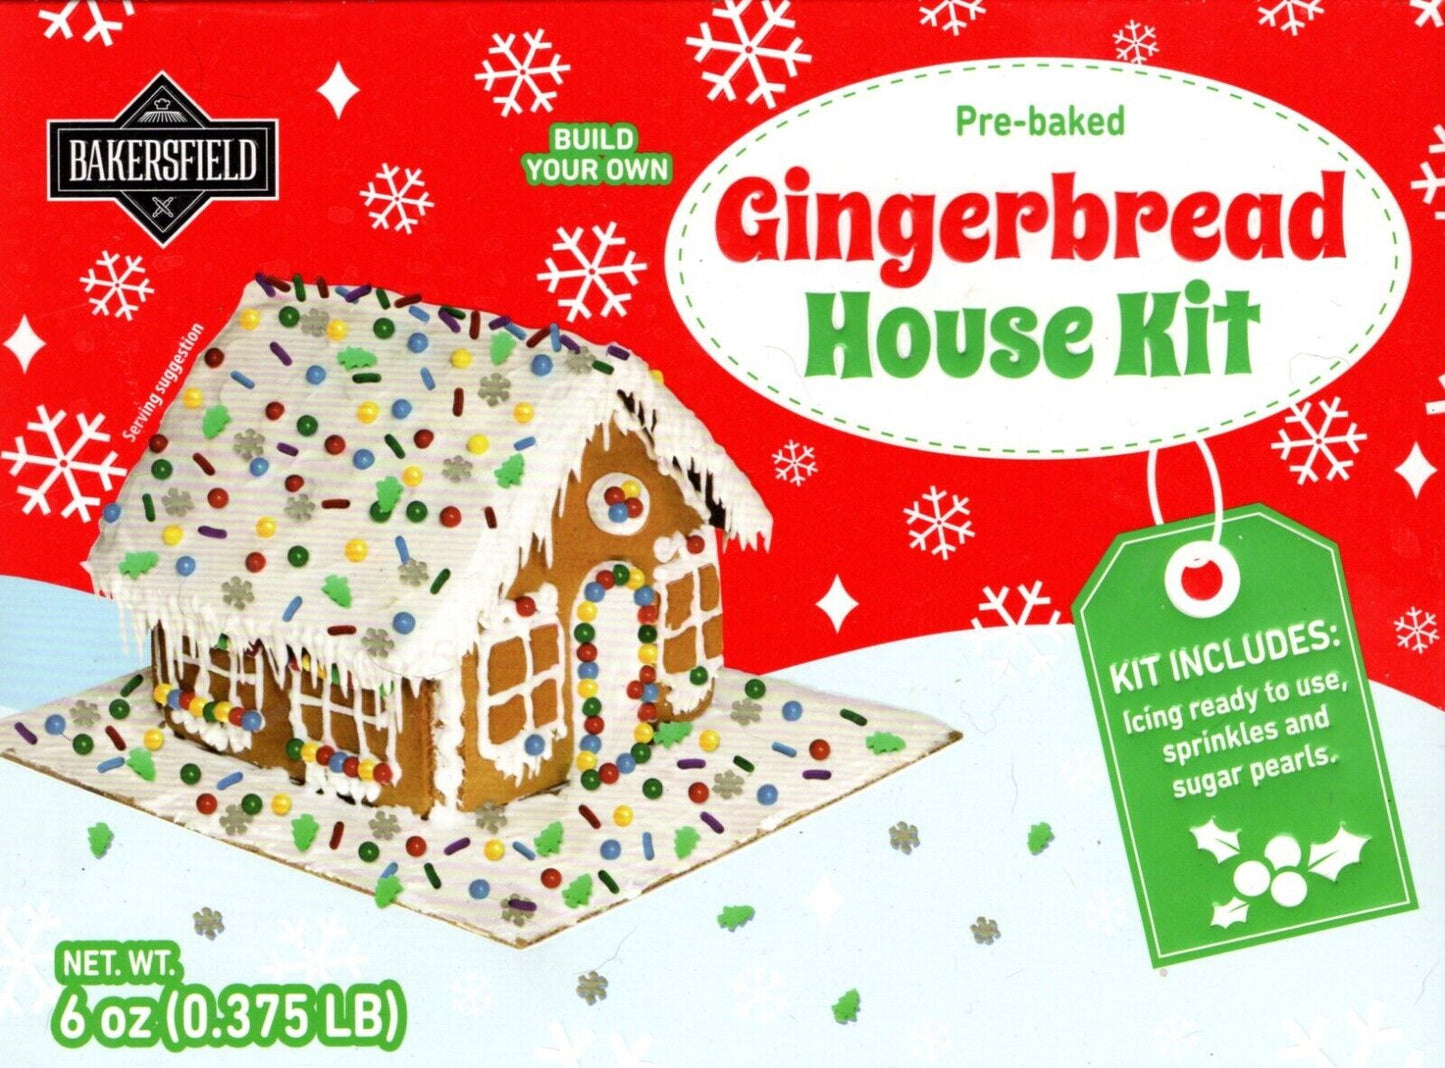 Bakersfield Pre-Baked Gingerbread House Kit 6 Oz (0.375 LB) Christmas Set of 2